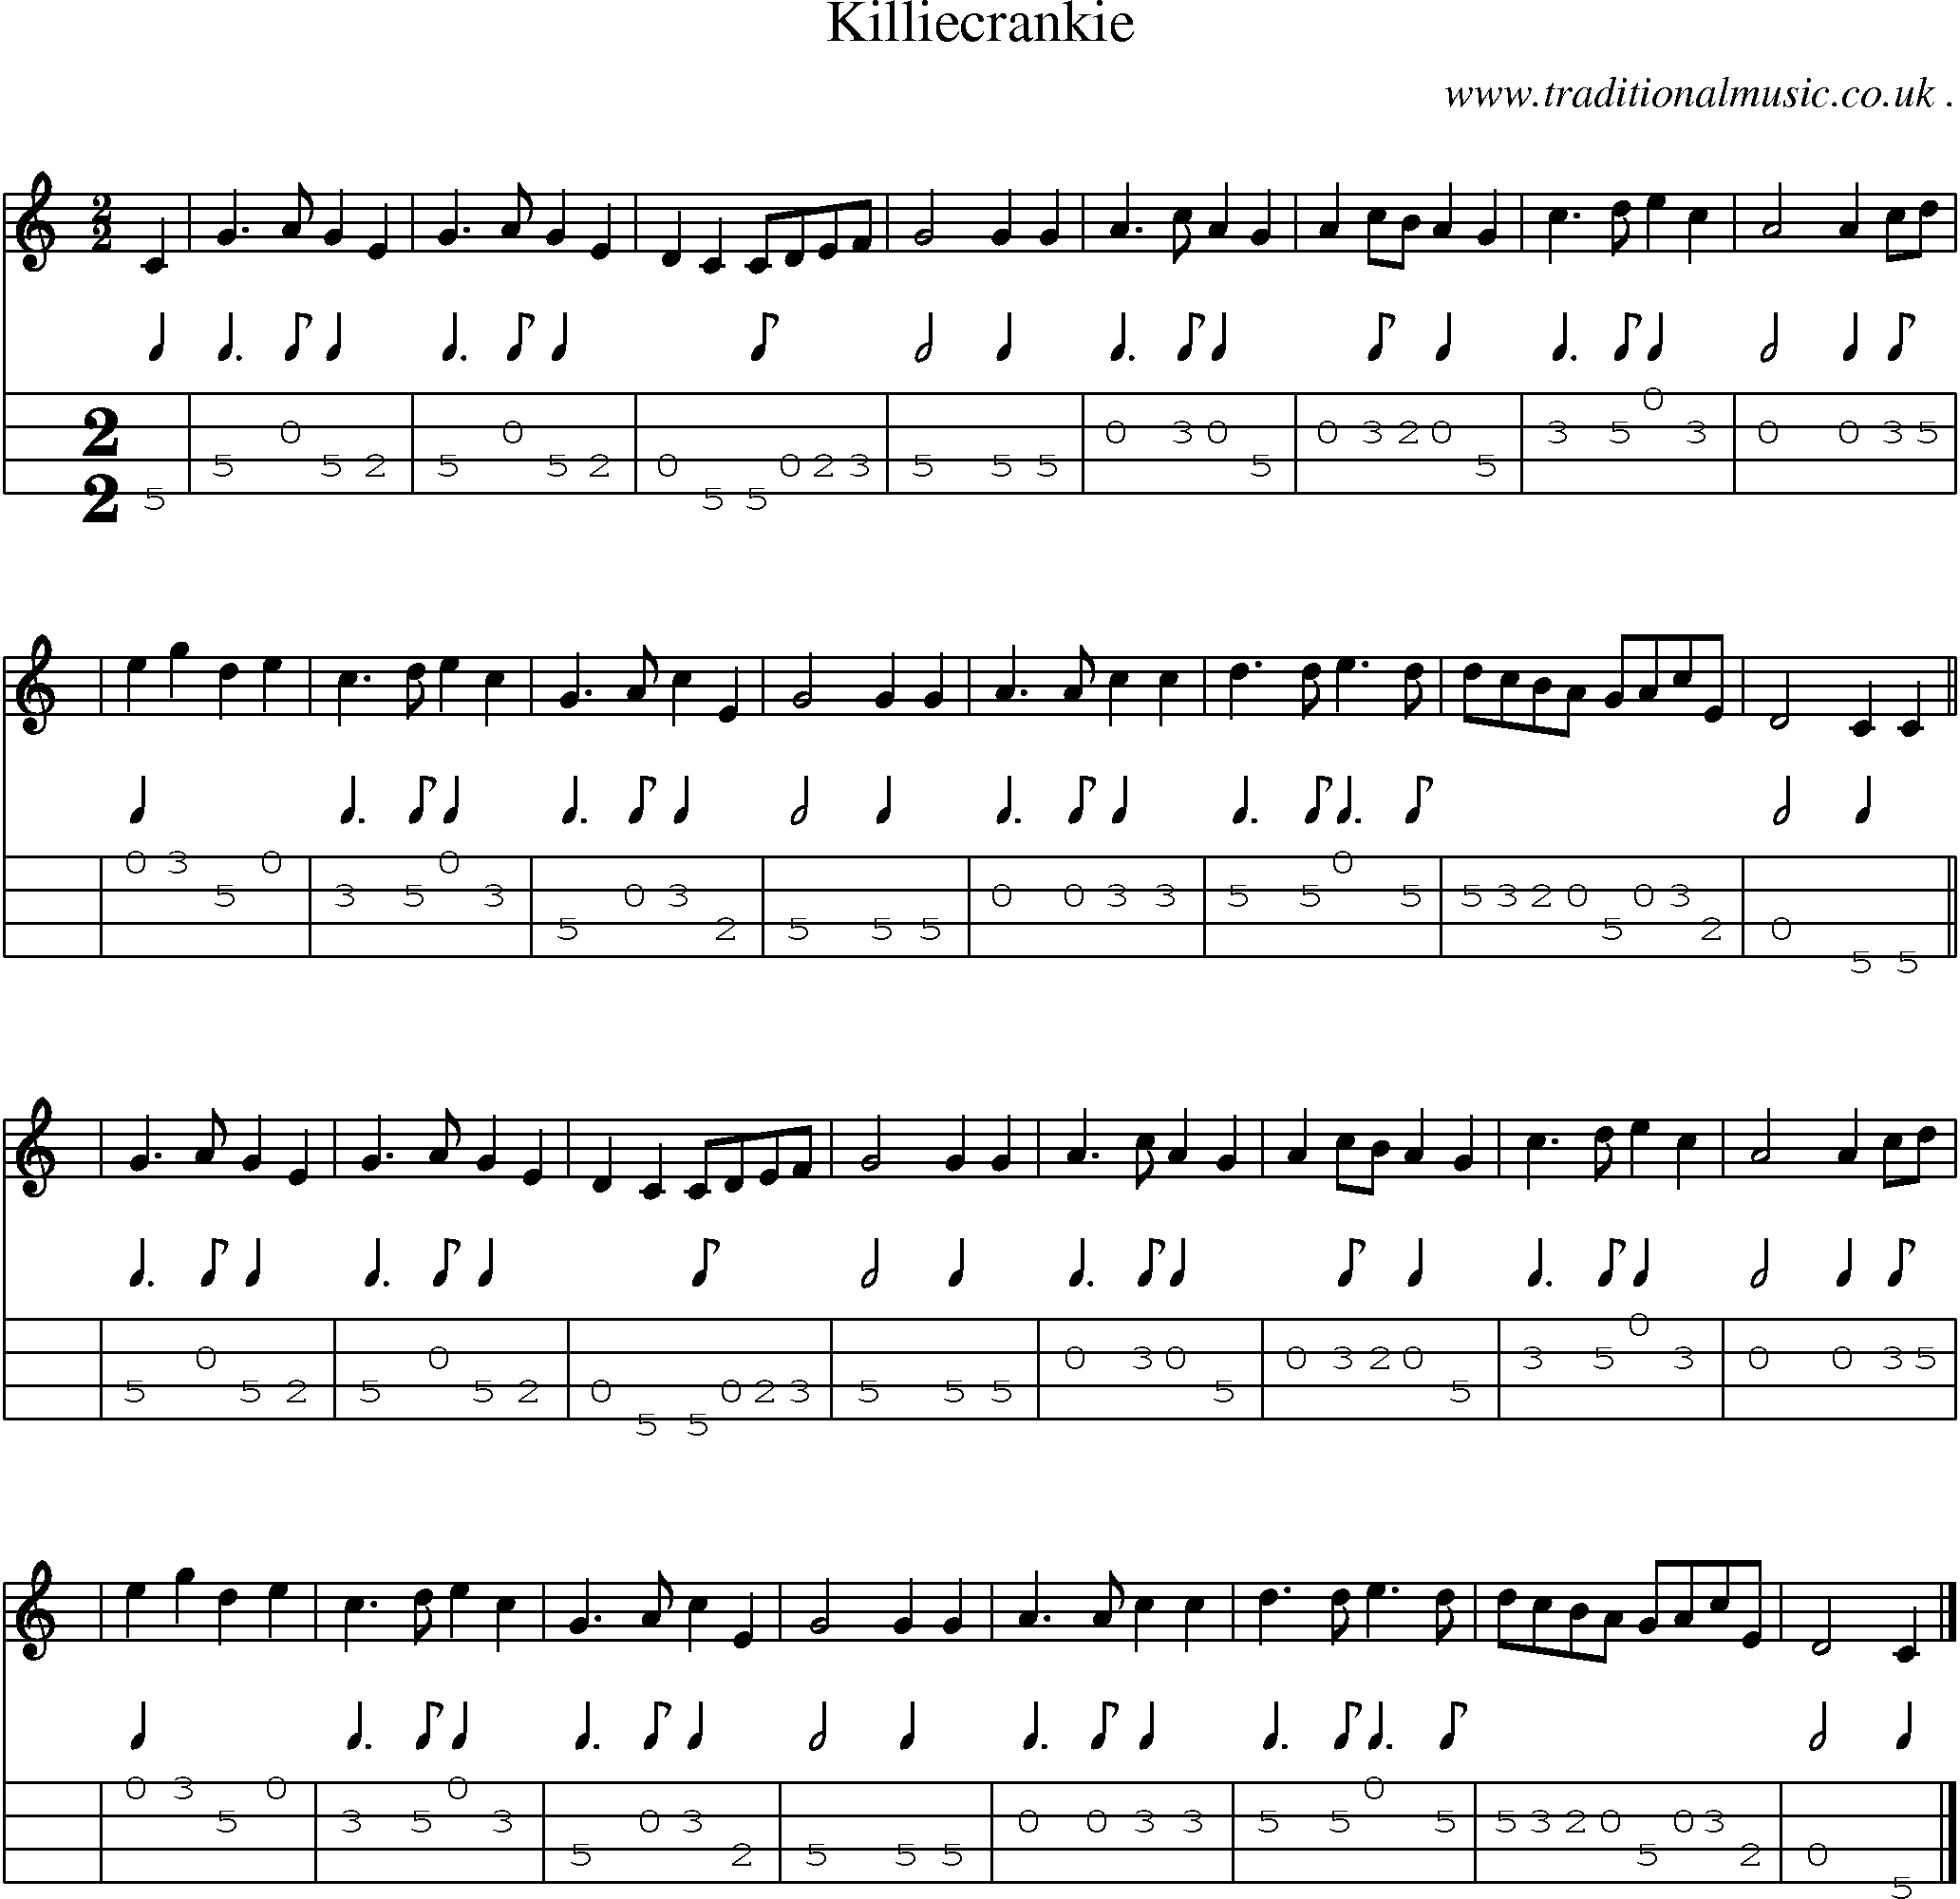 Sheet-music  score, Chords and Mandolin Tabs for Killiecrankie